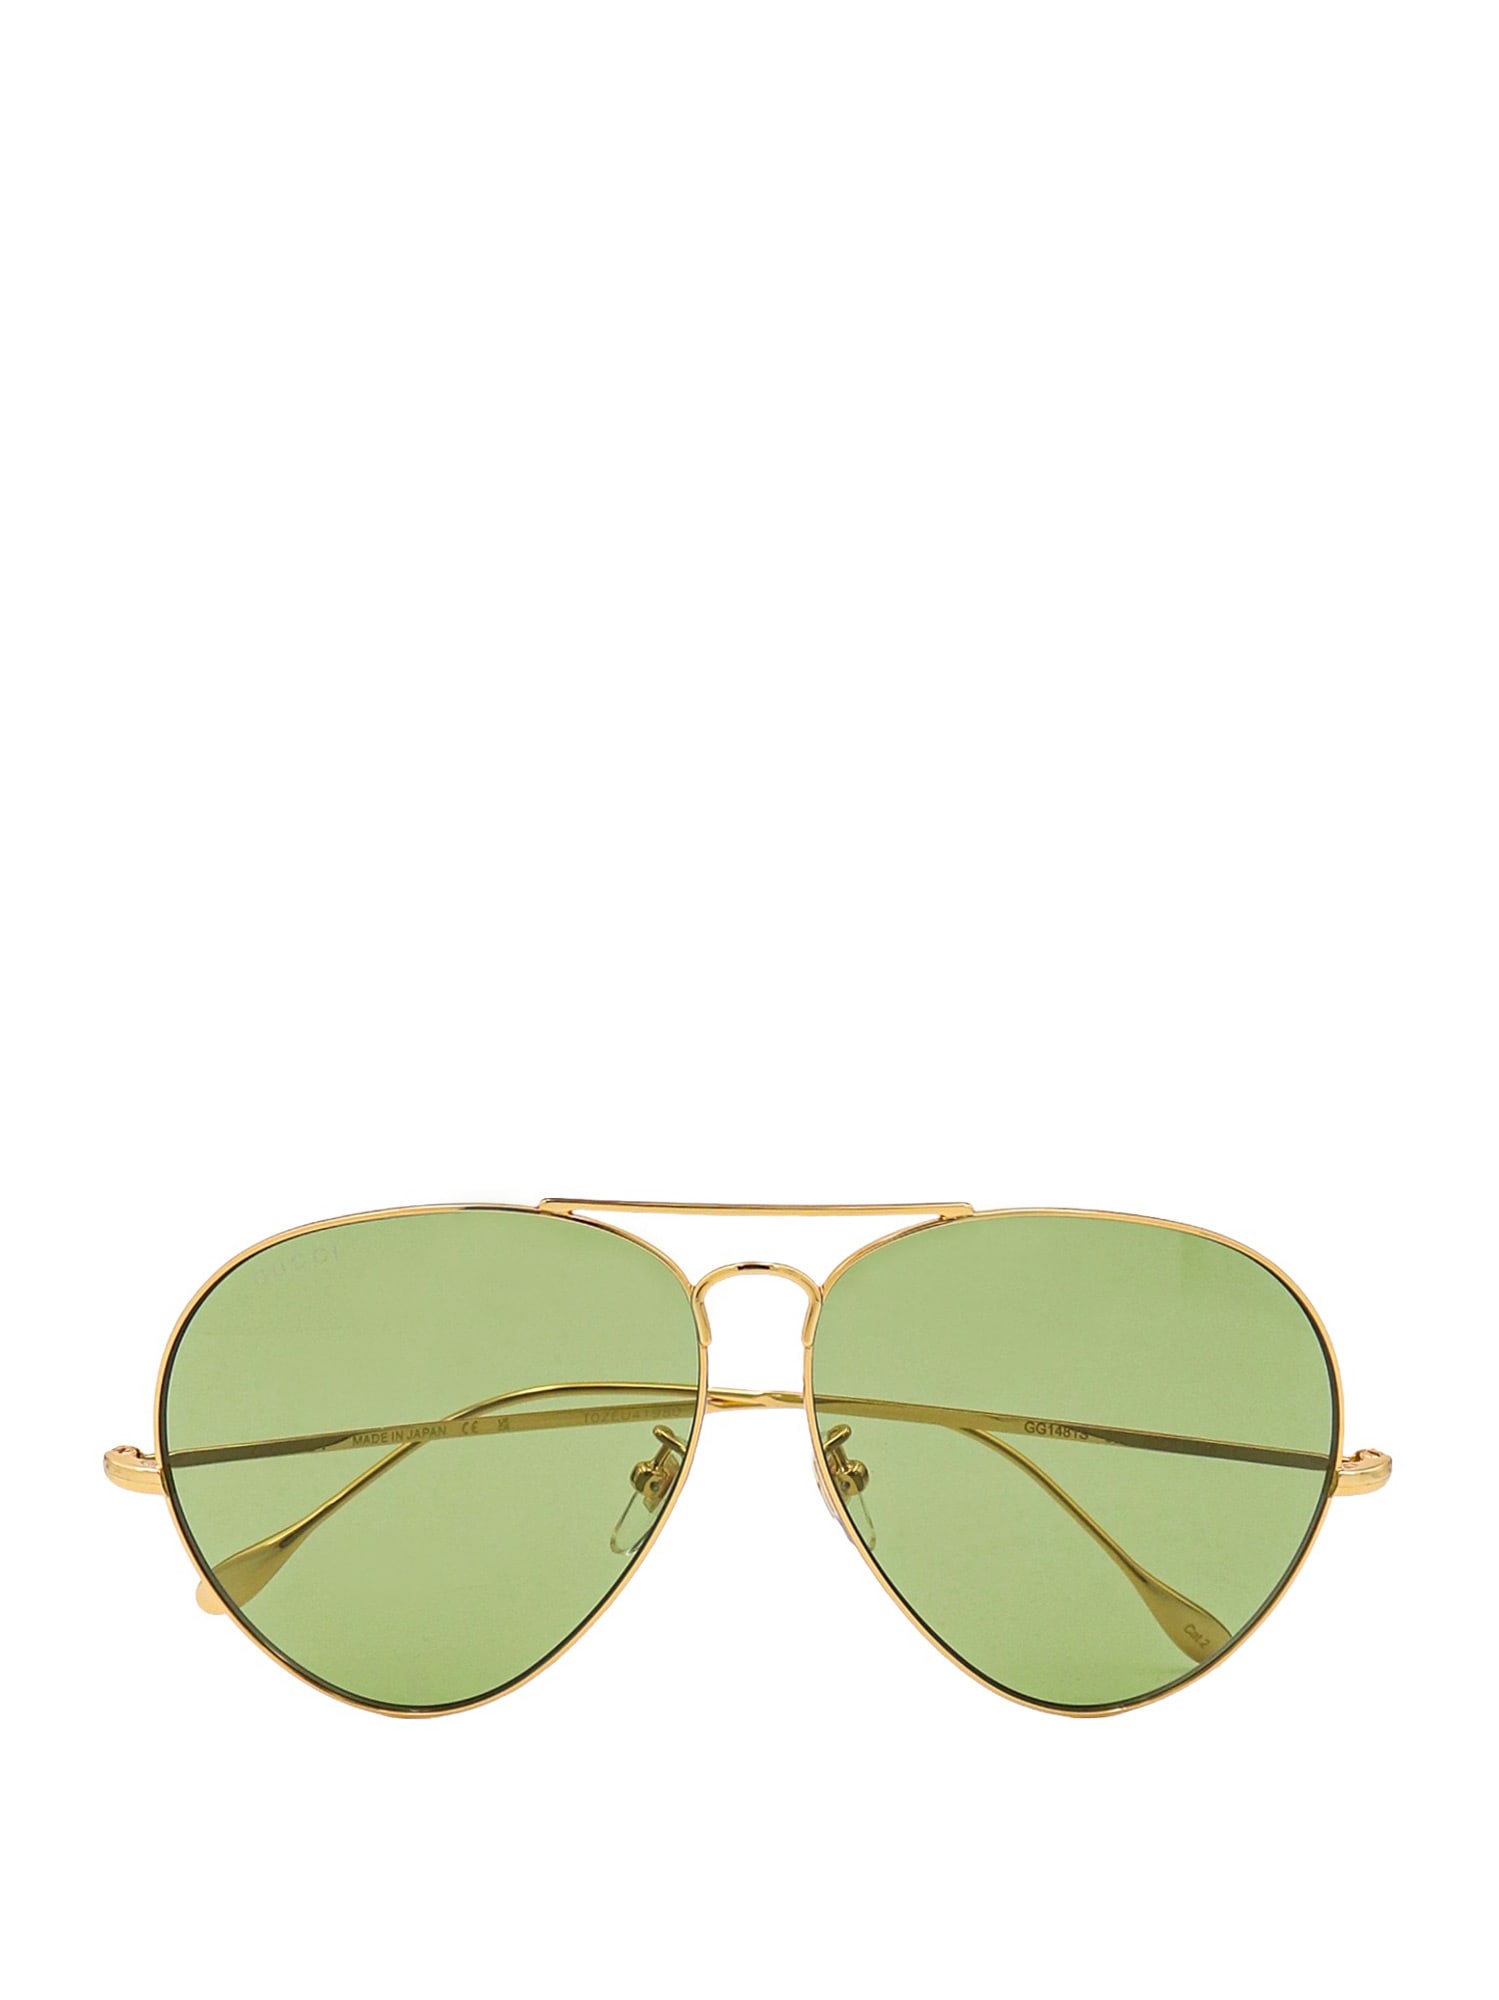 Gucci Navigator Sunglasses In Metallic